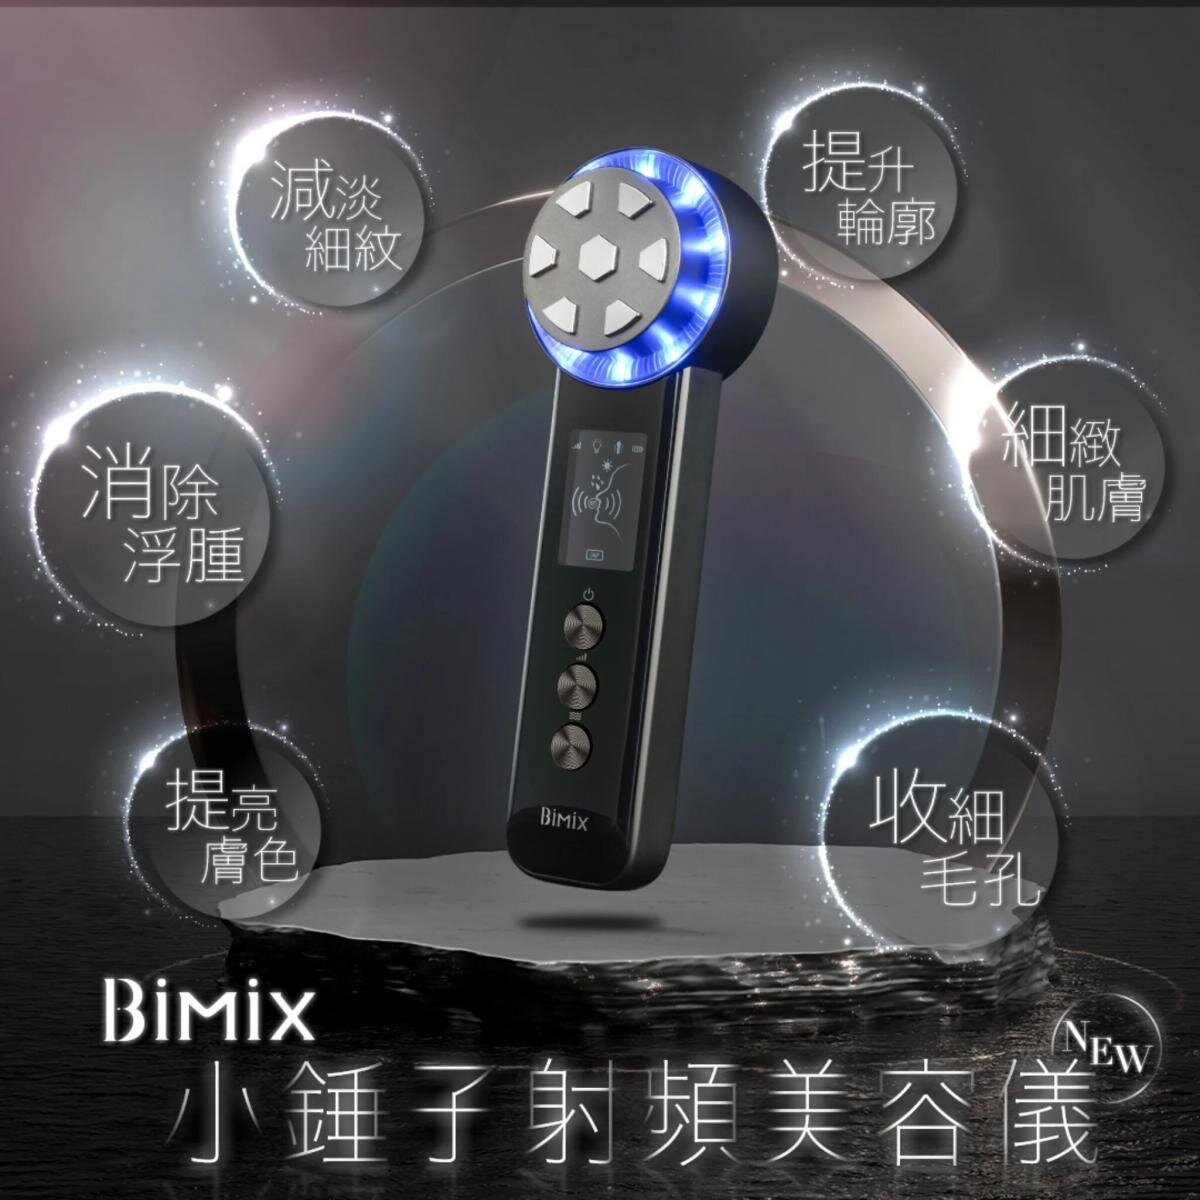 Bimix 小錘子射頻美容儀- 好用6大美容功效| Cosmart Shop